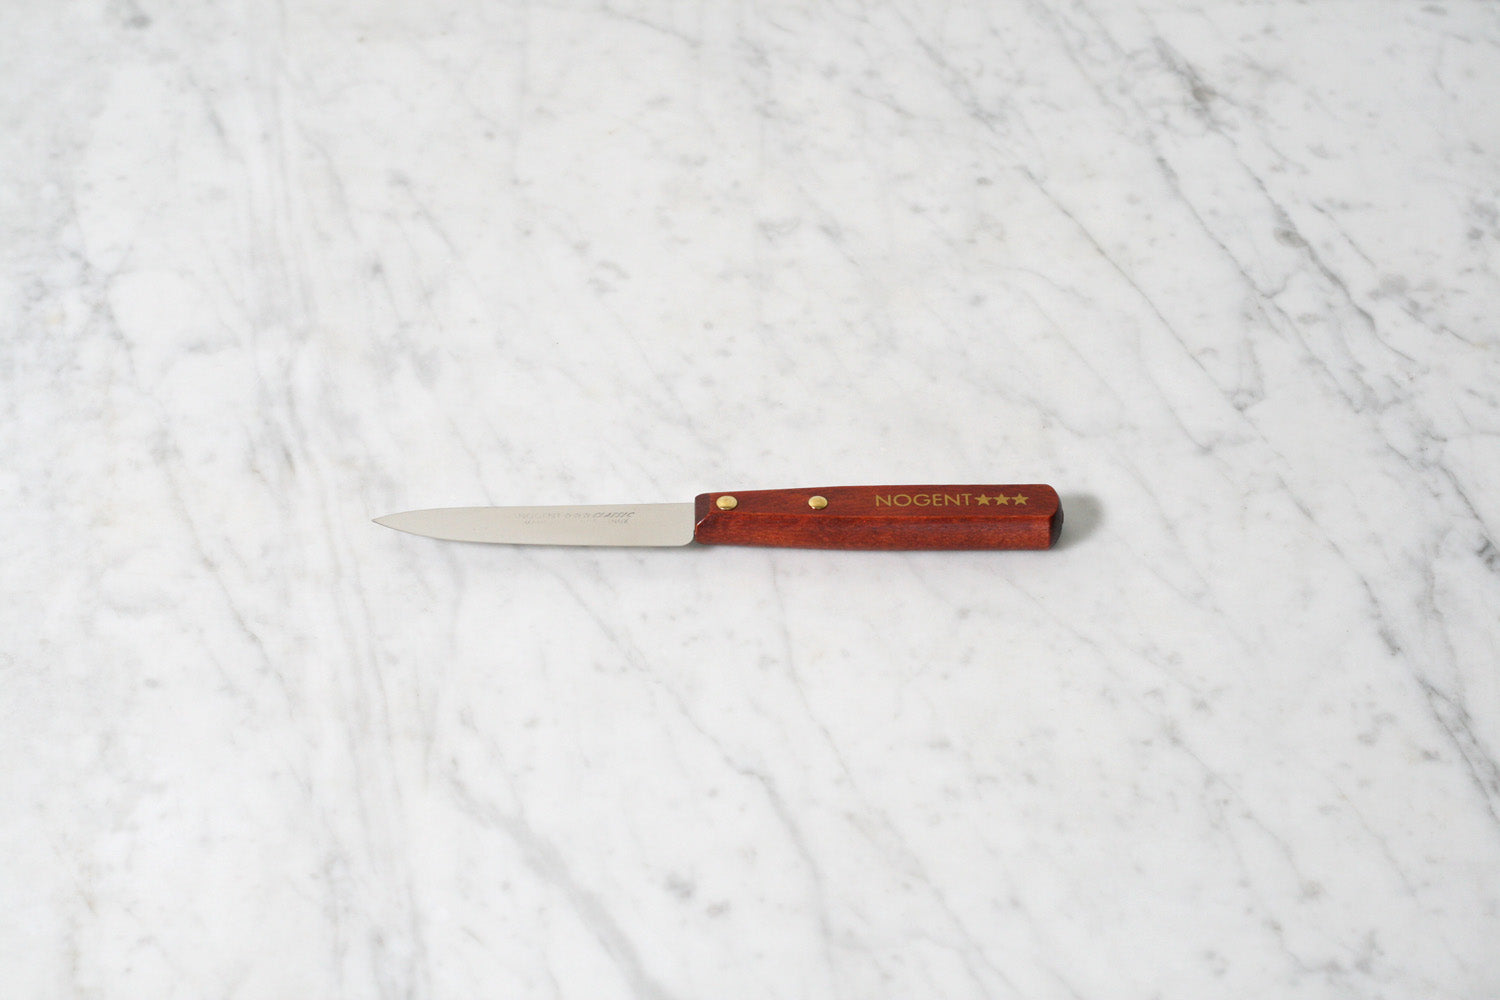 Nogent Classic Paring Knife